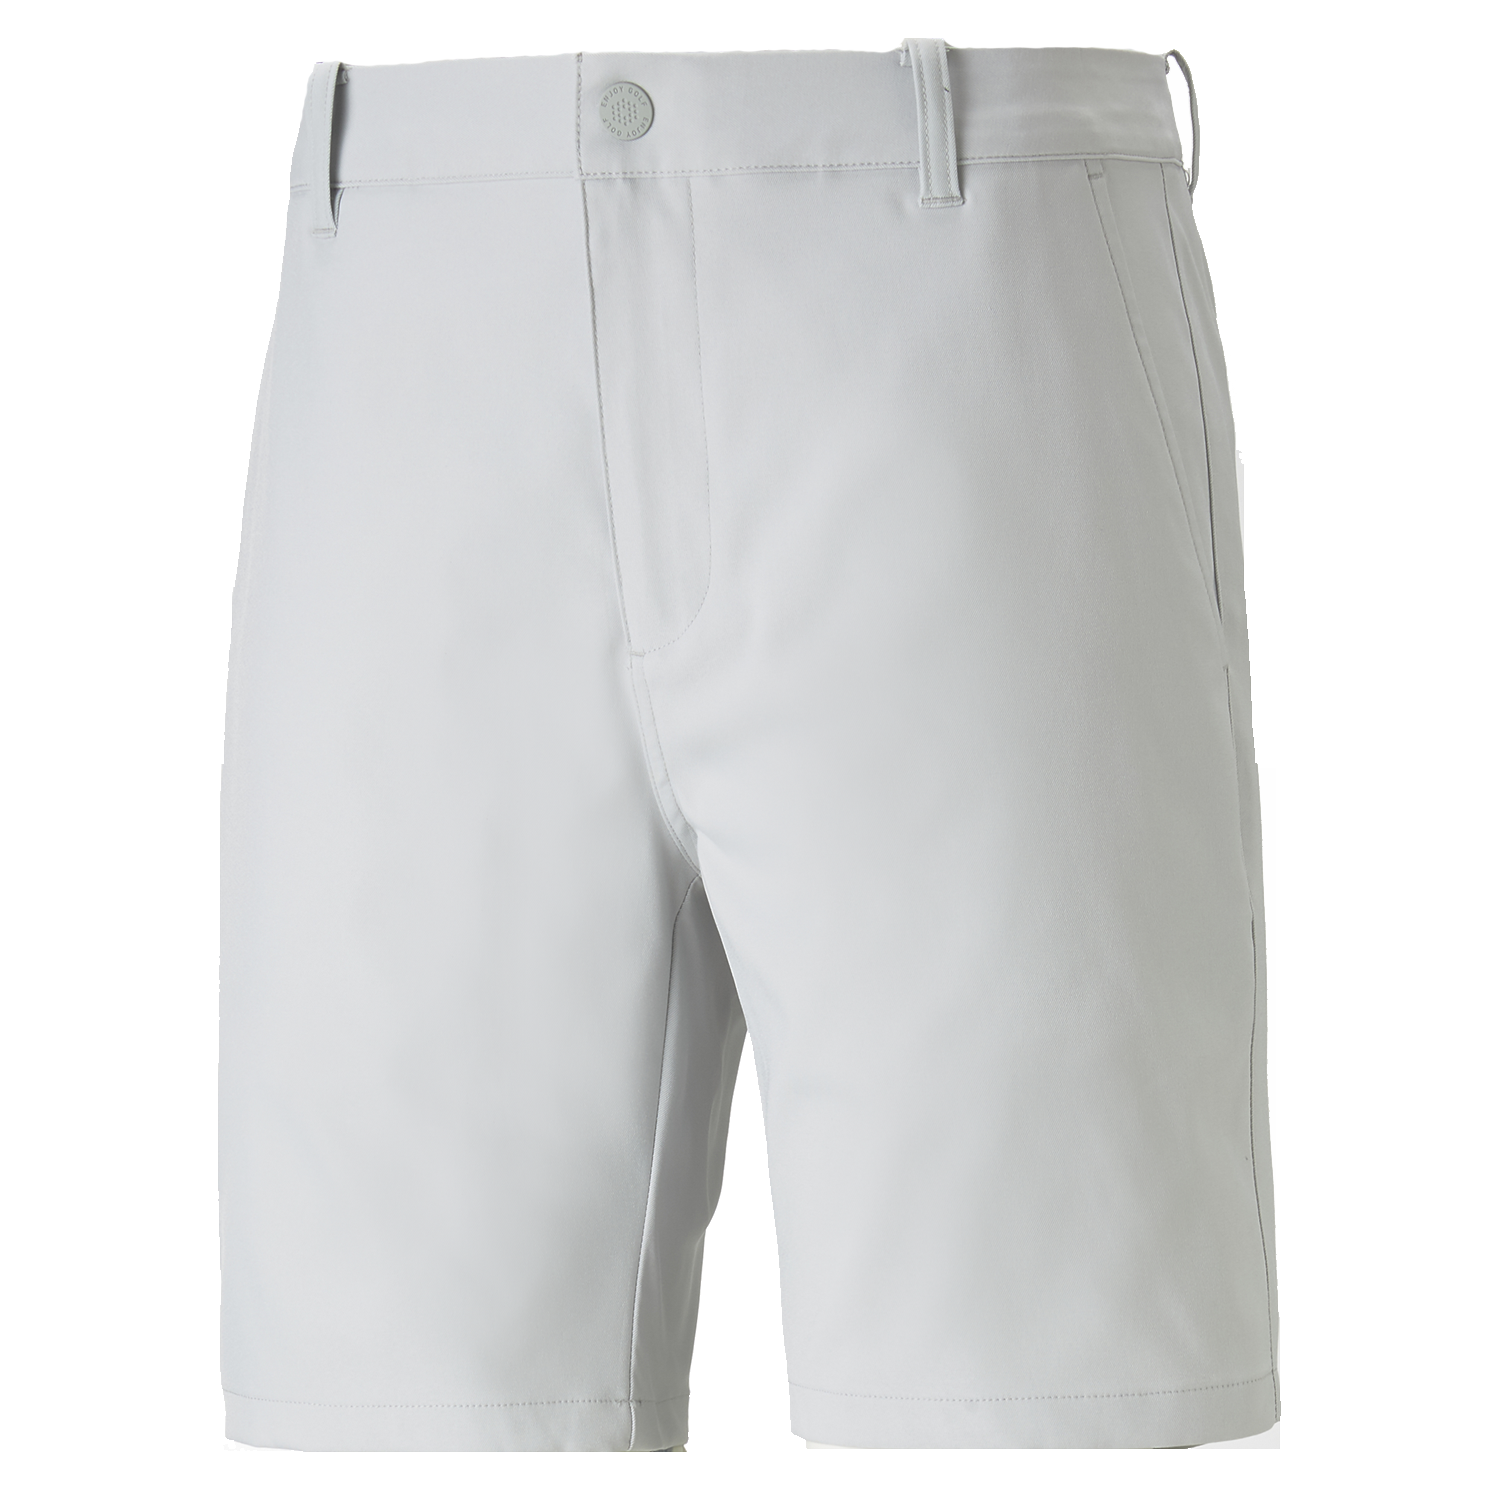 PUMA Dealer Tailored Shorts Ash Gray | Scottsdale Golf